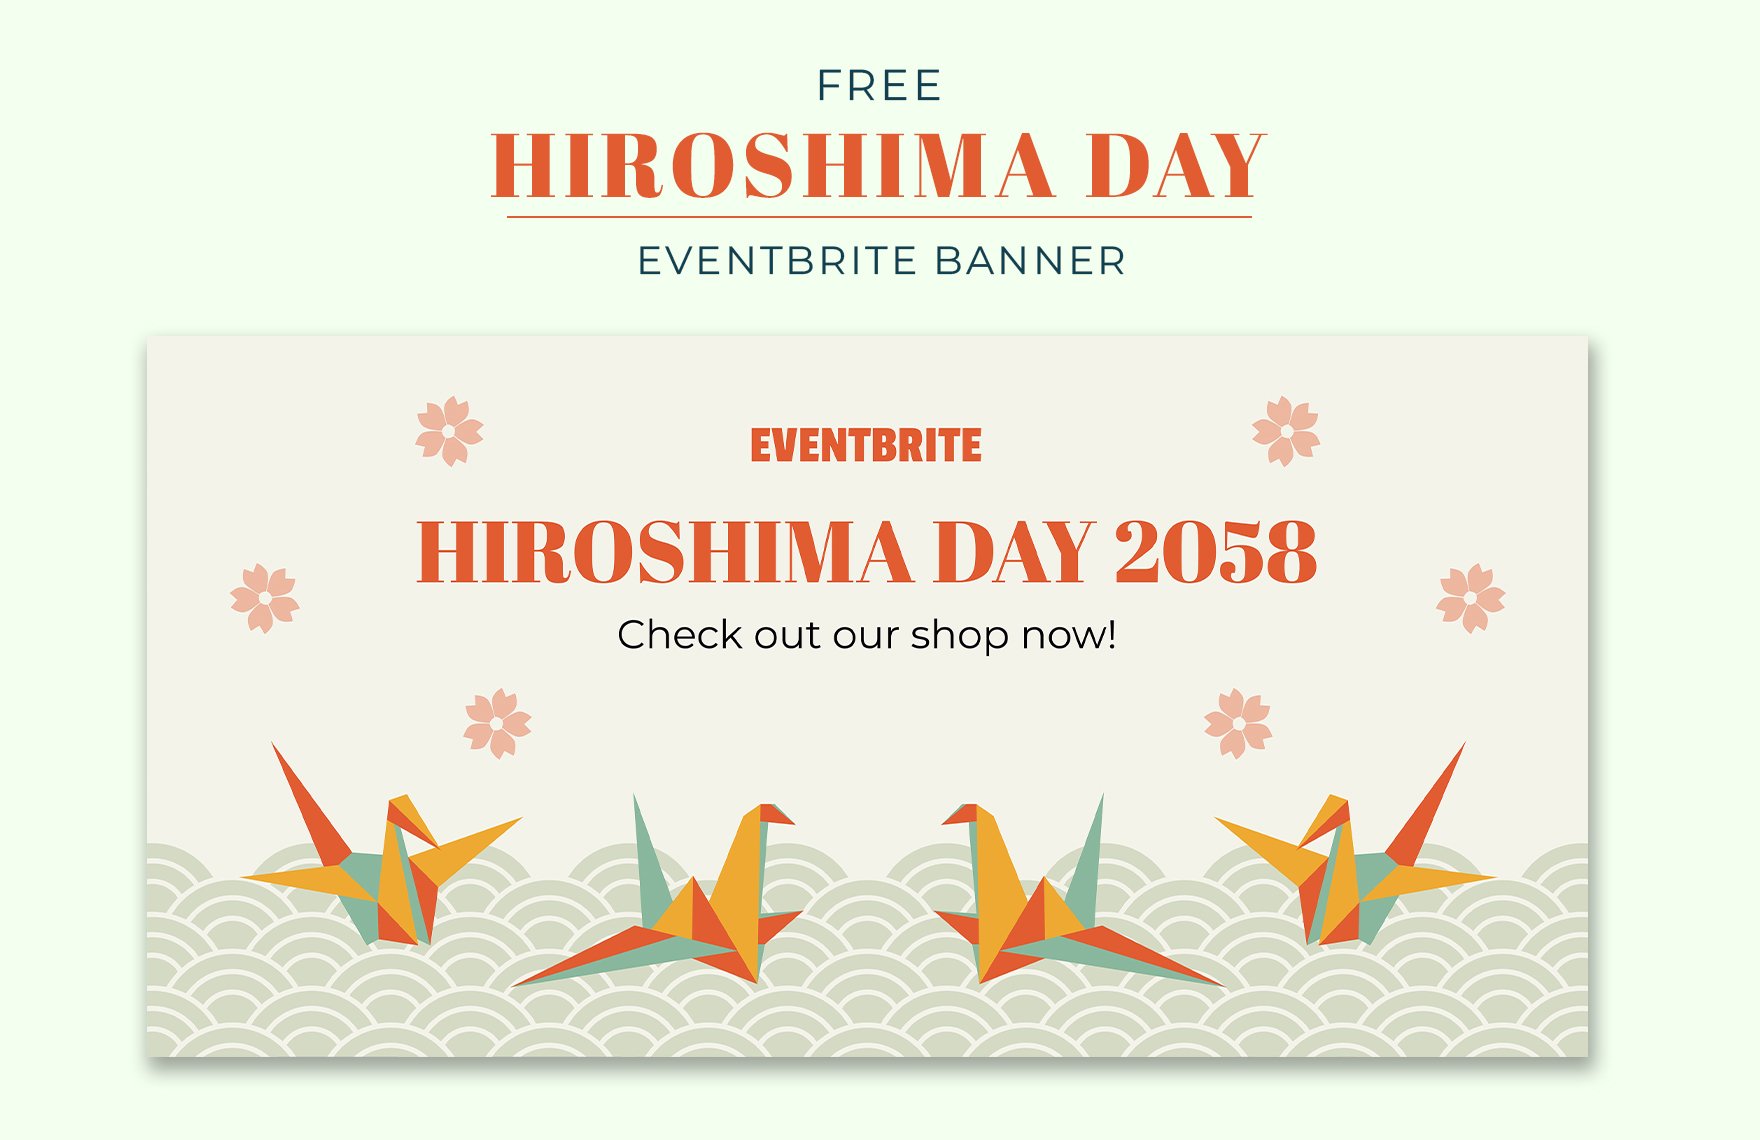 Hiroshima Day Eventbrite Banner